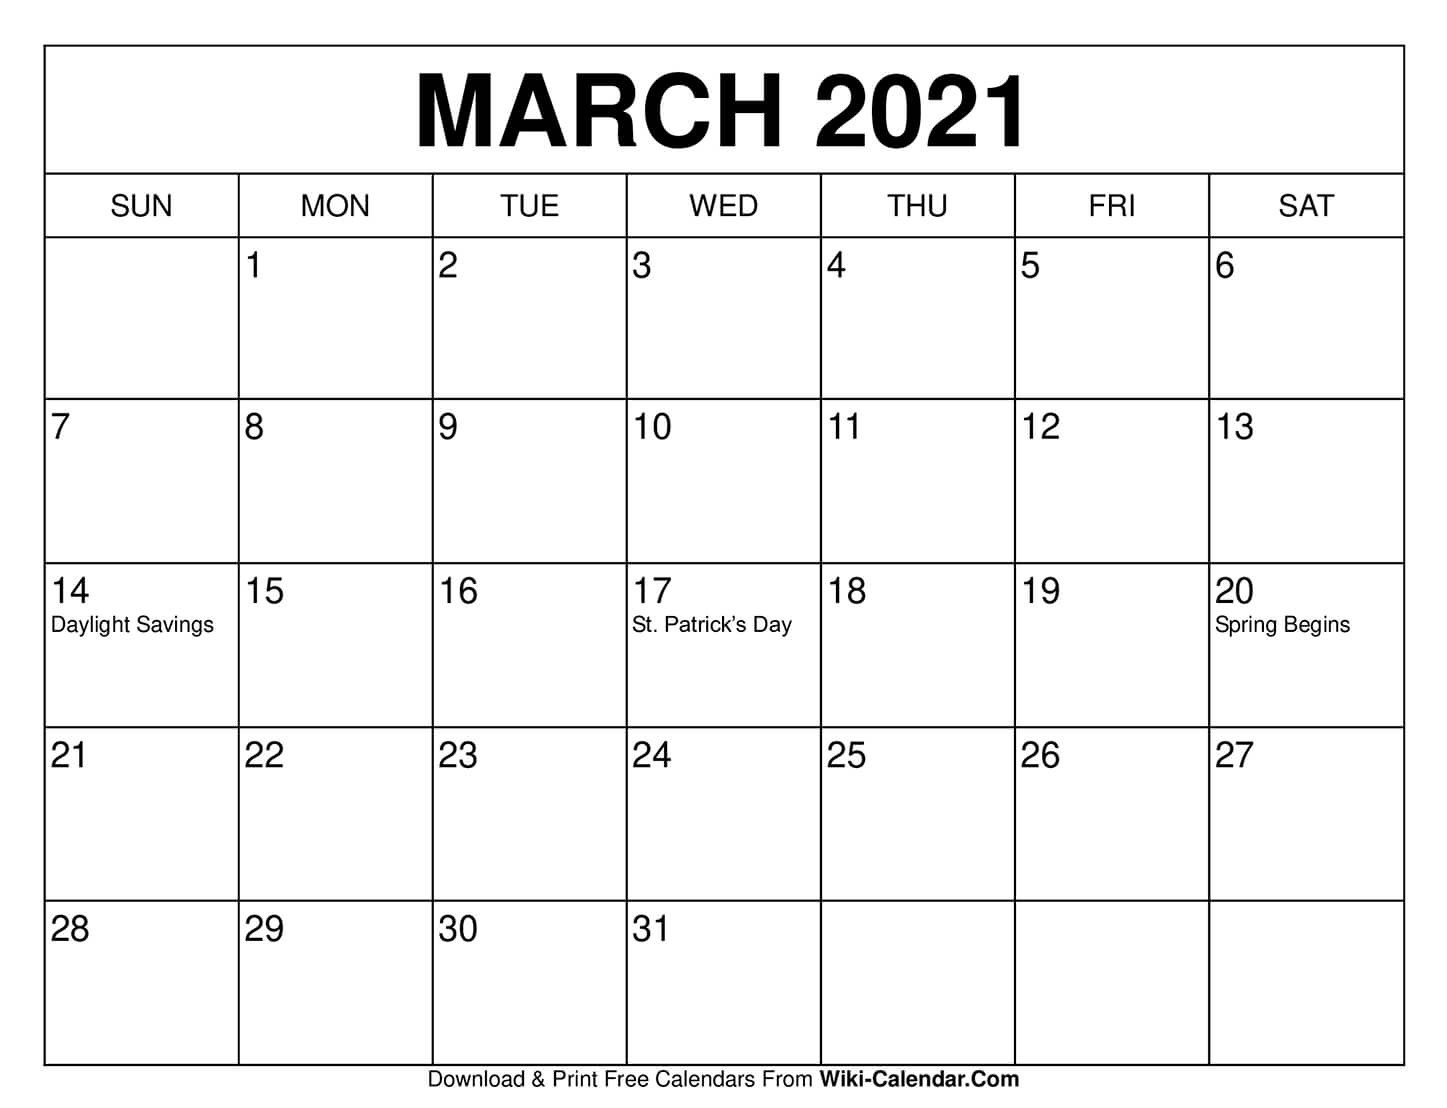 Free Printable March 2021 Calendars-March 2021 Printable Calendar